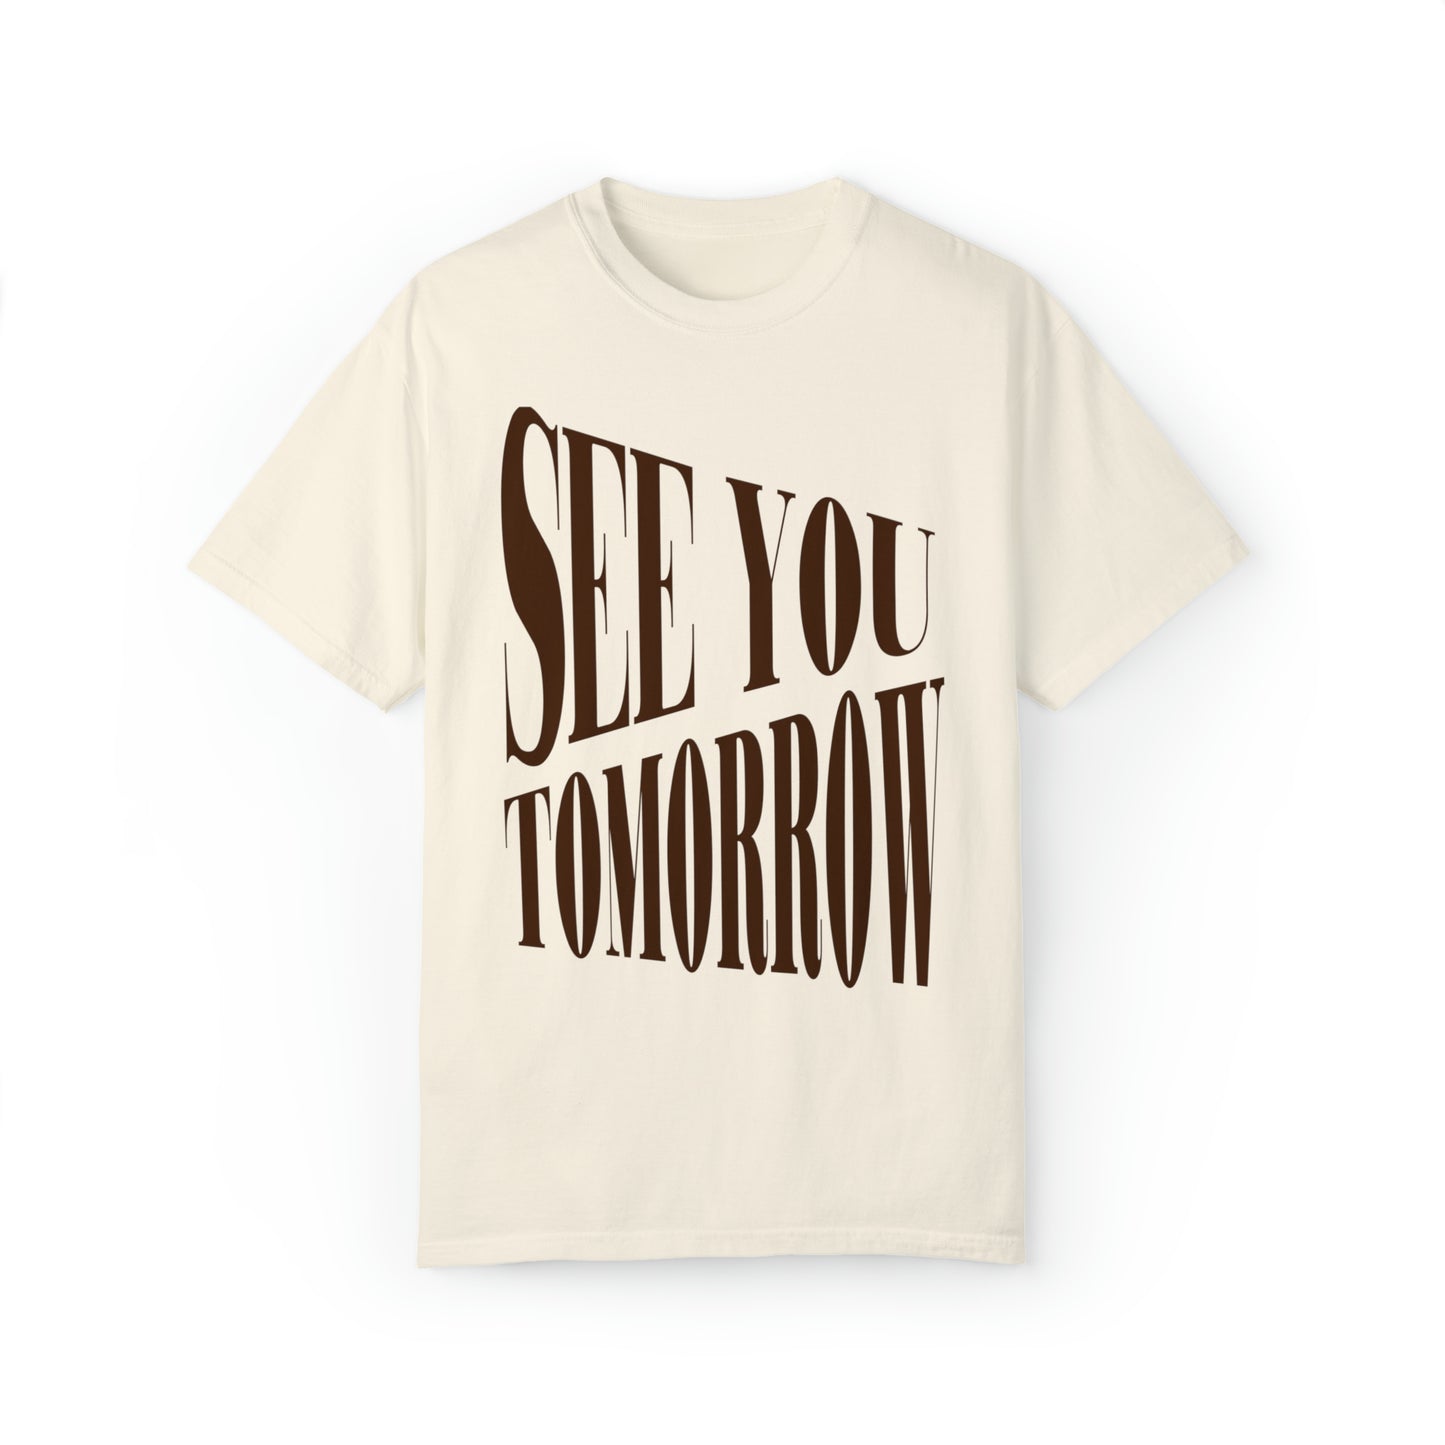 See You Tomorrow T-shirt